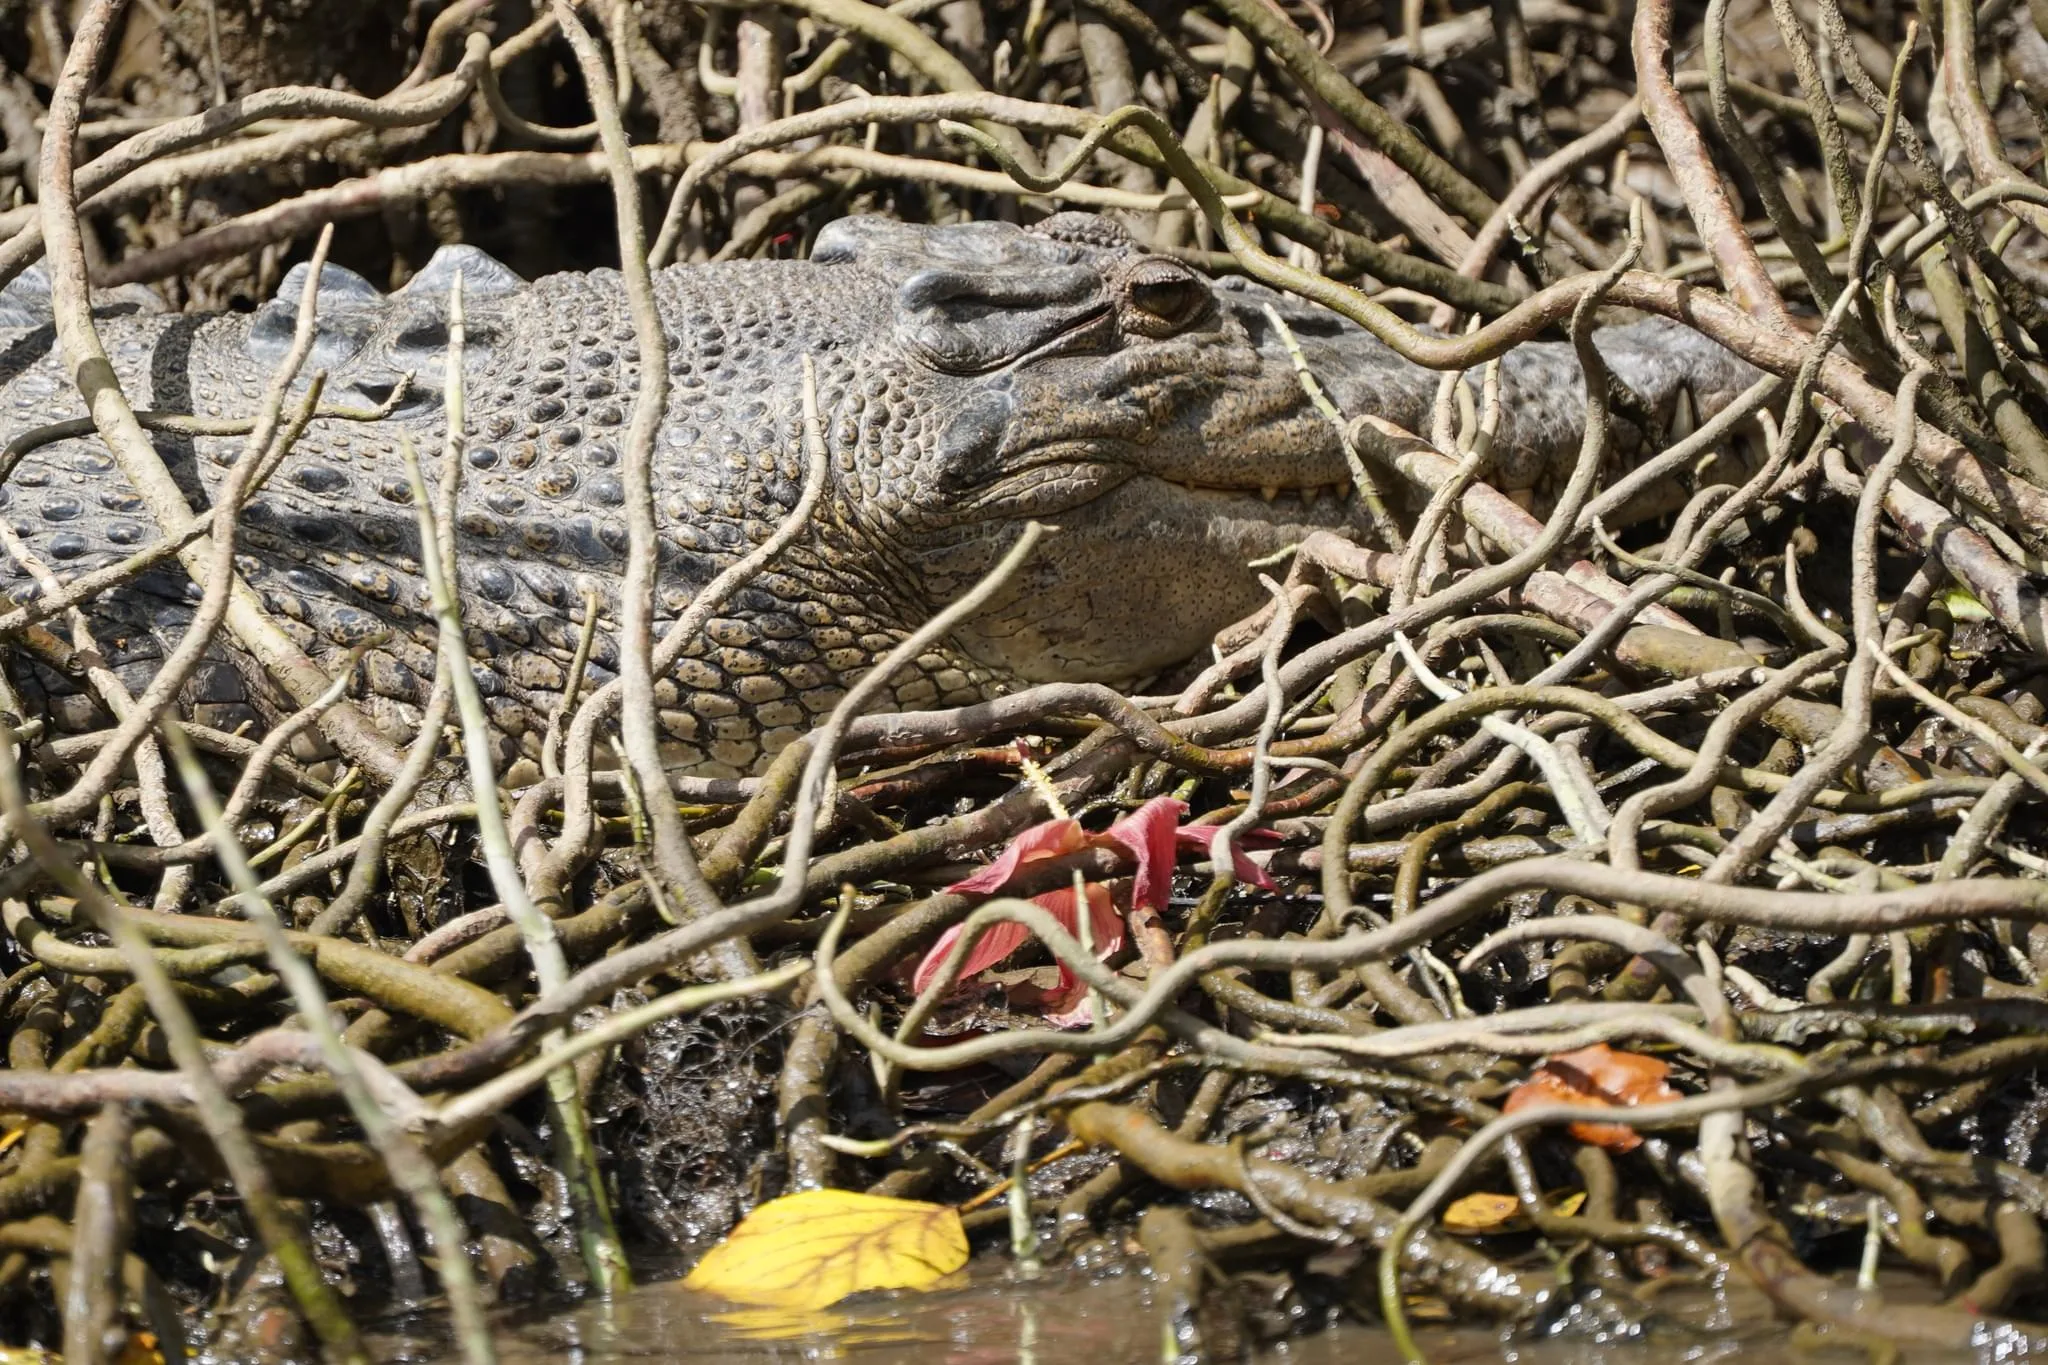 136 photos of Saltwater Crocodiles in Wild